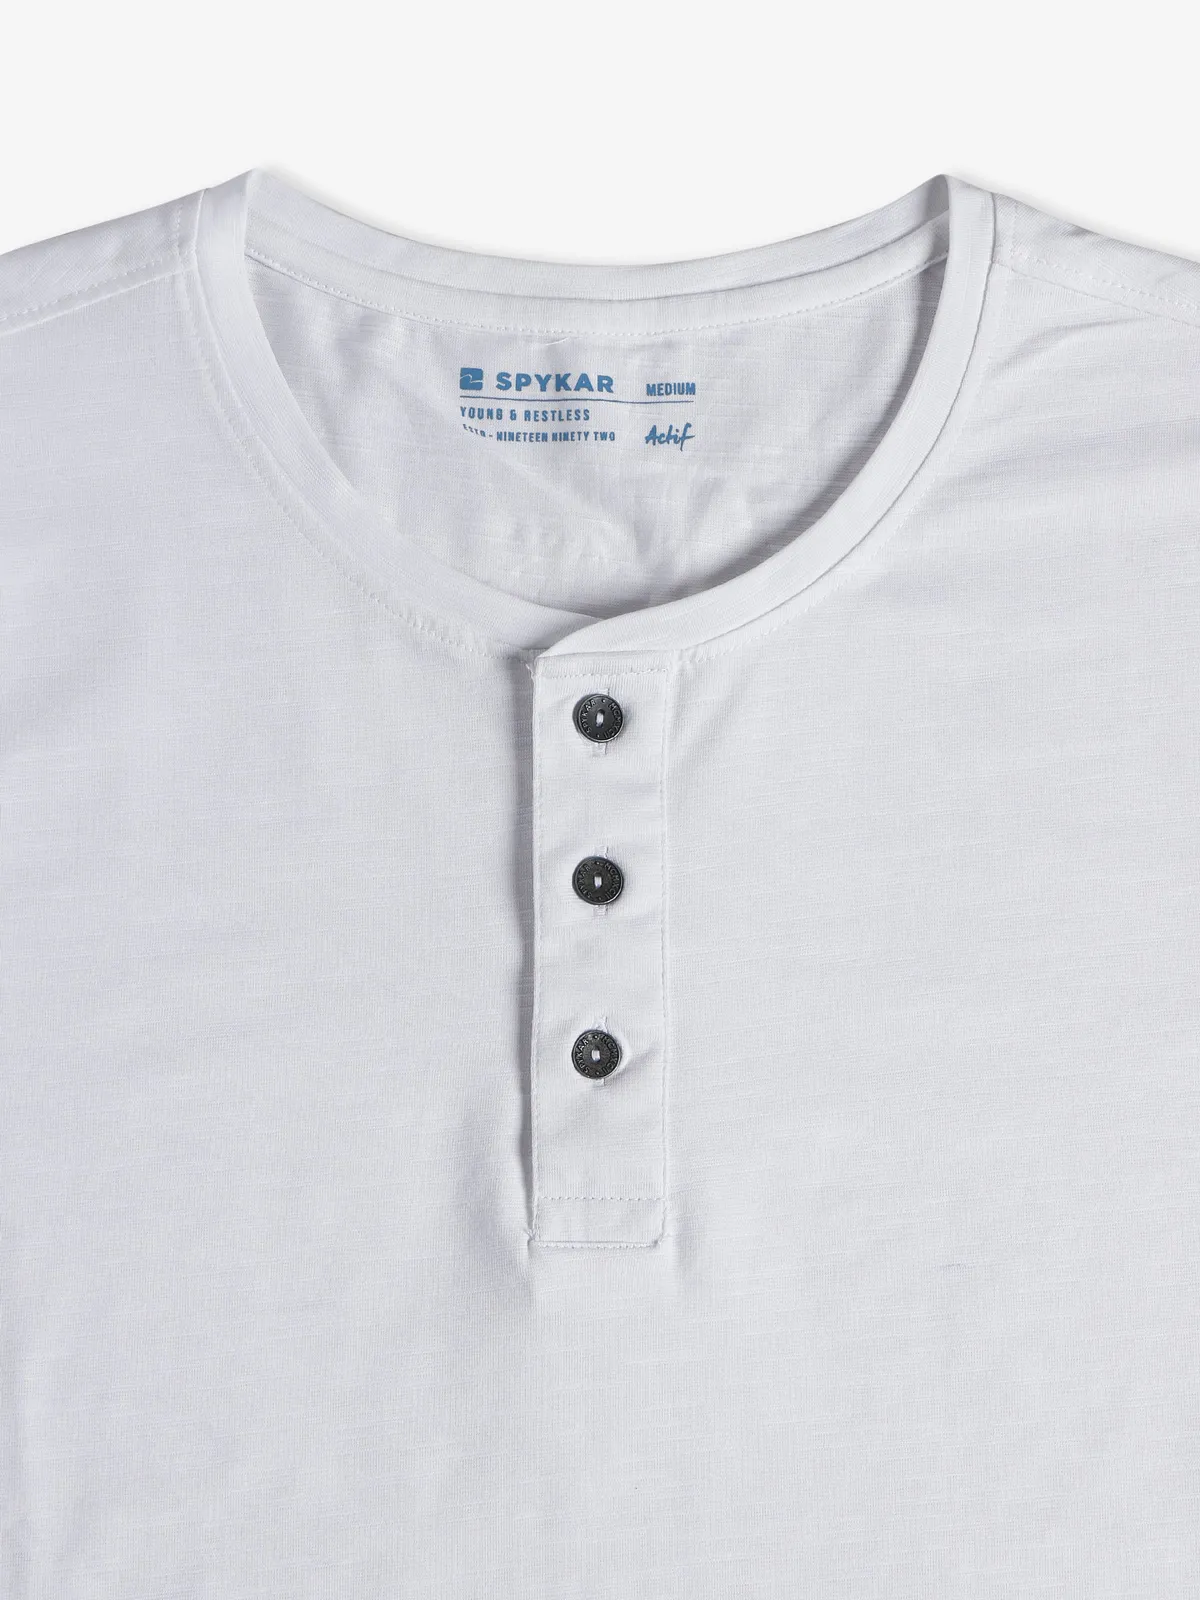 Spykar white cotton t-shirt